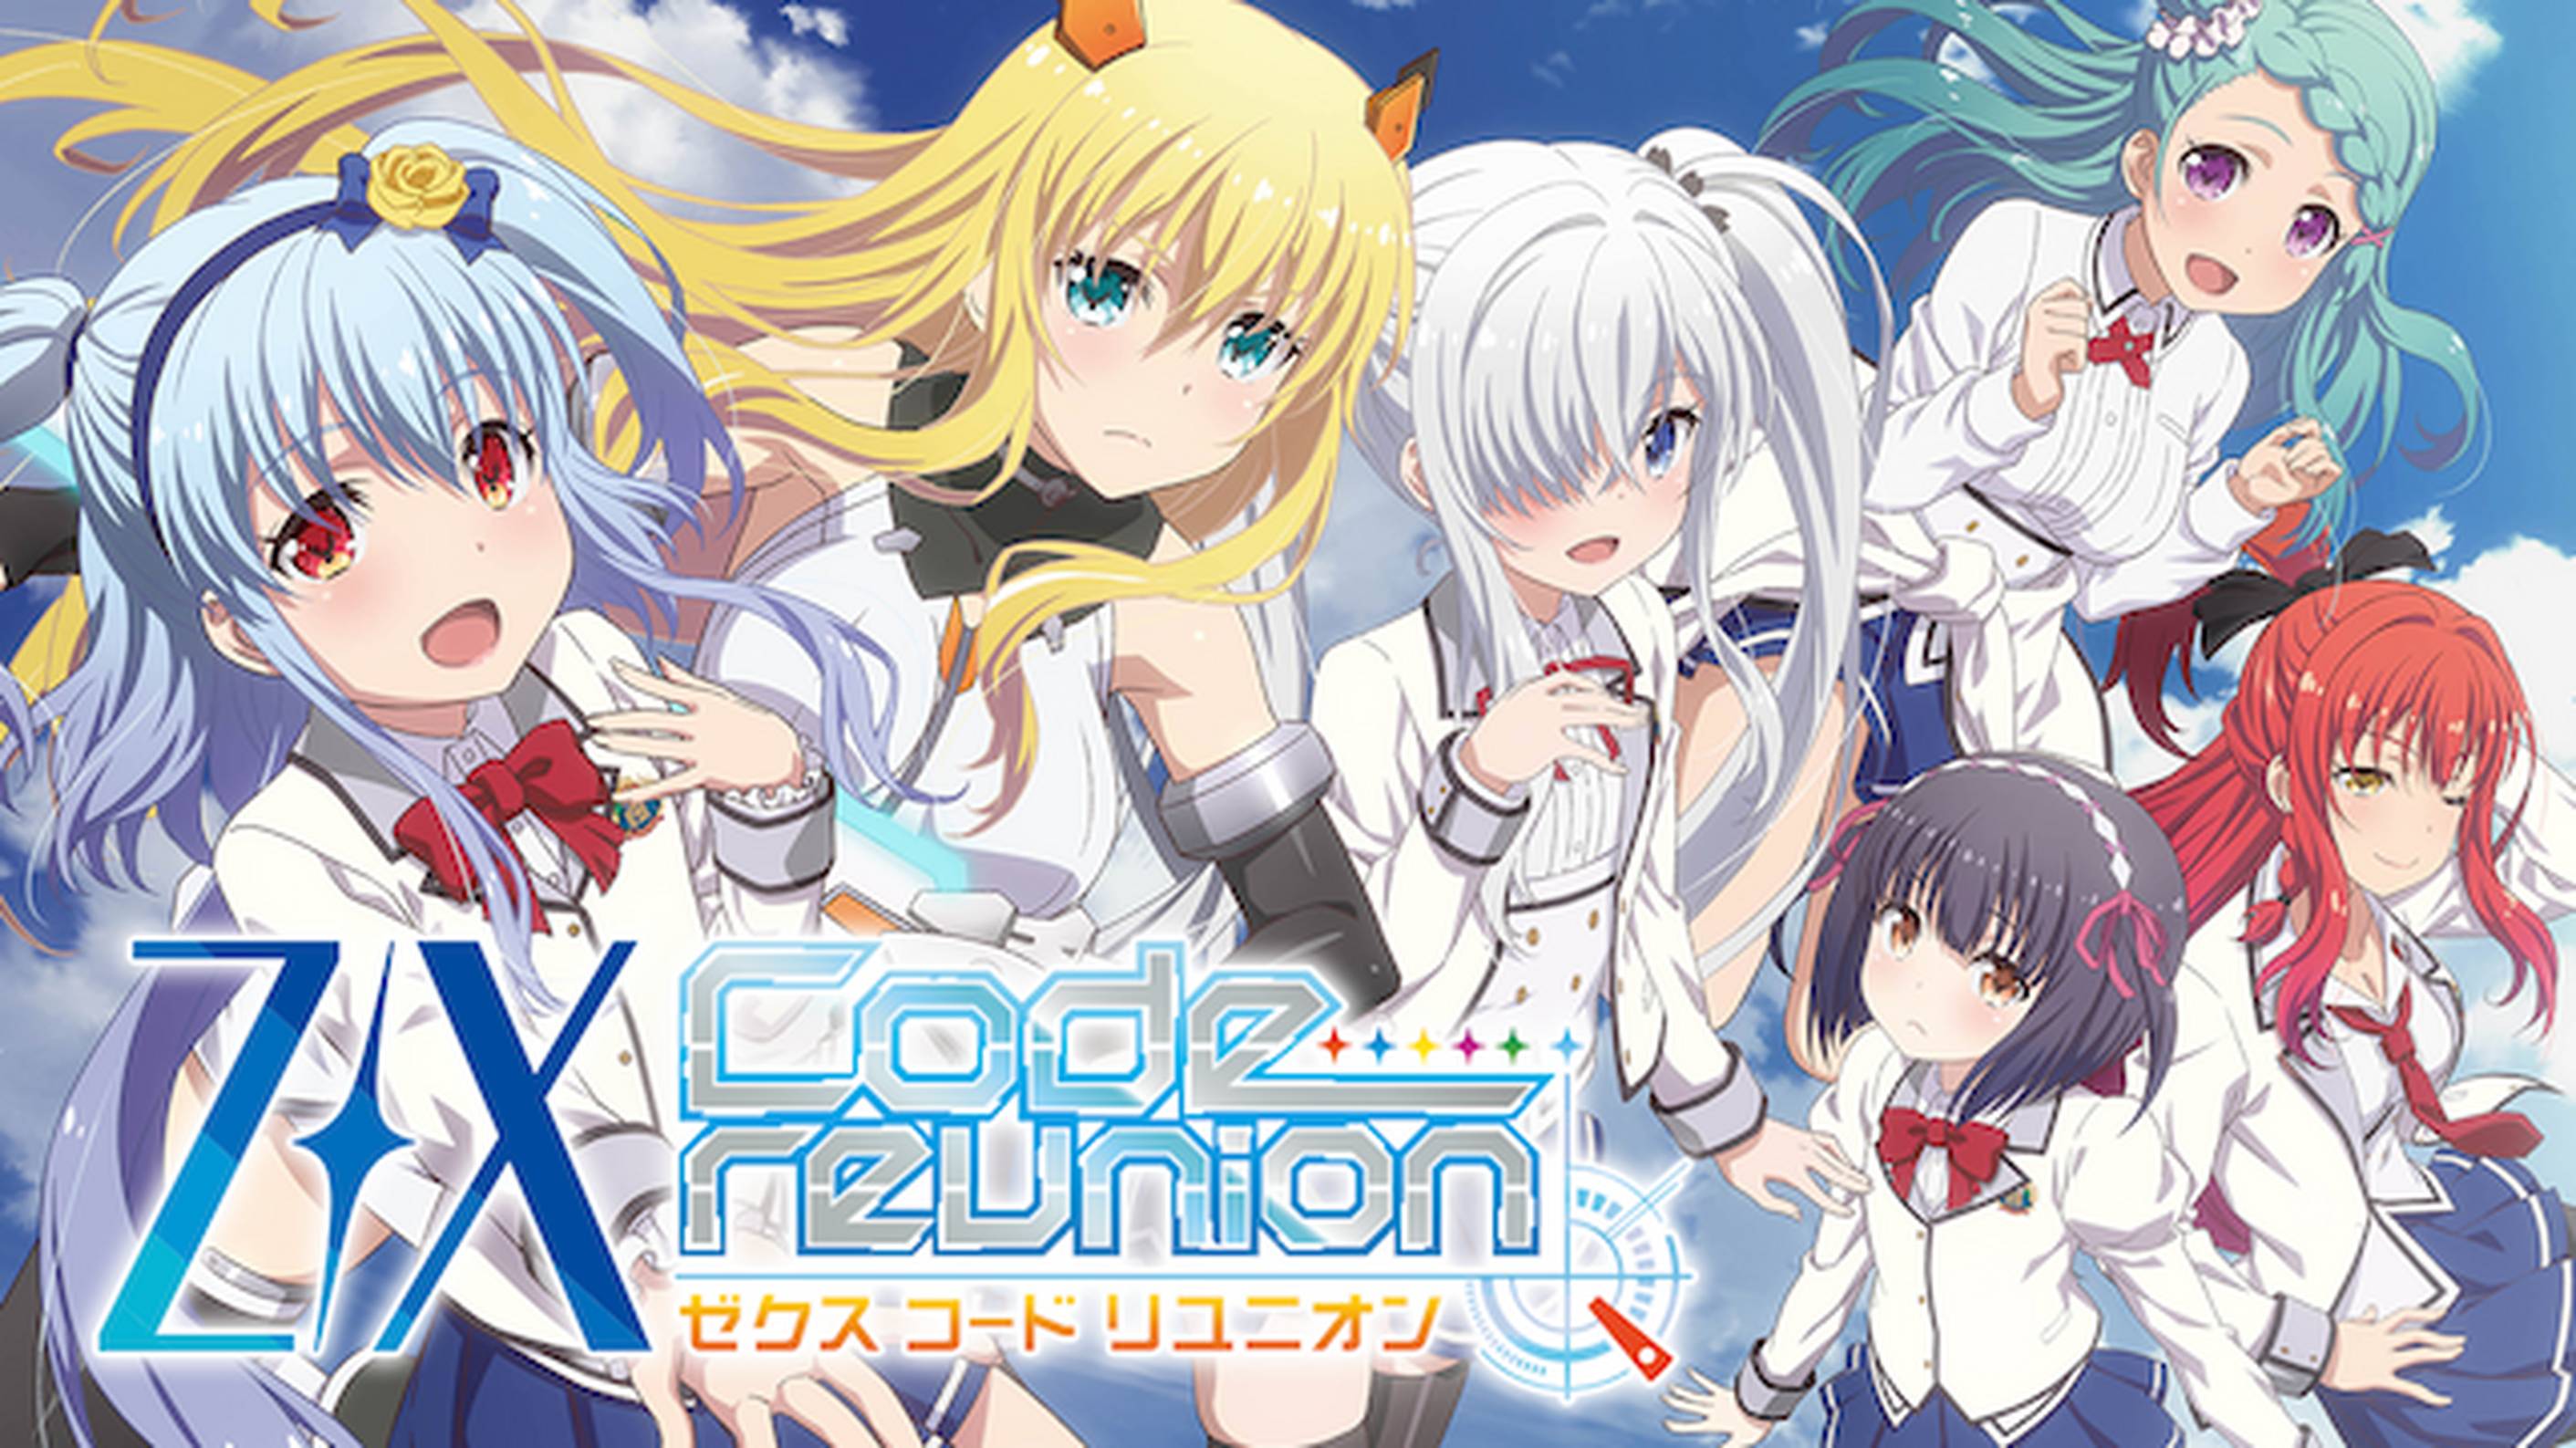 Z/X Code reunion(アニメ / 2019) - 動画配信 | U-NEXT 31日間無料 